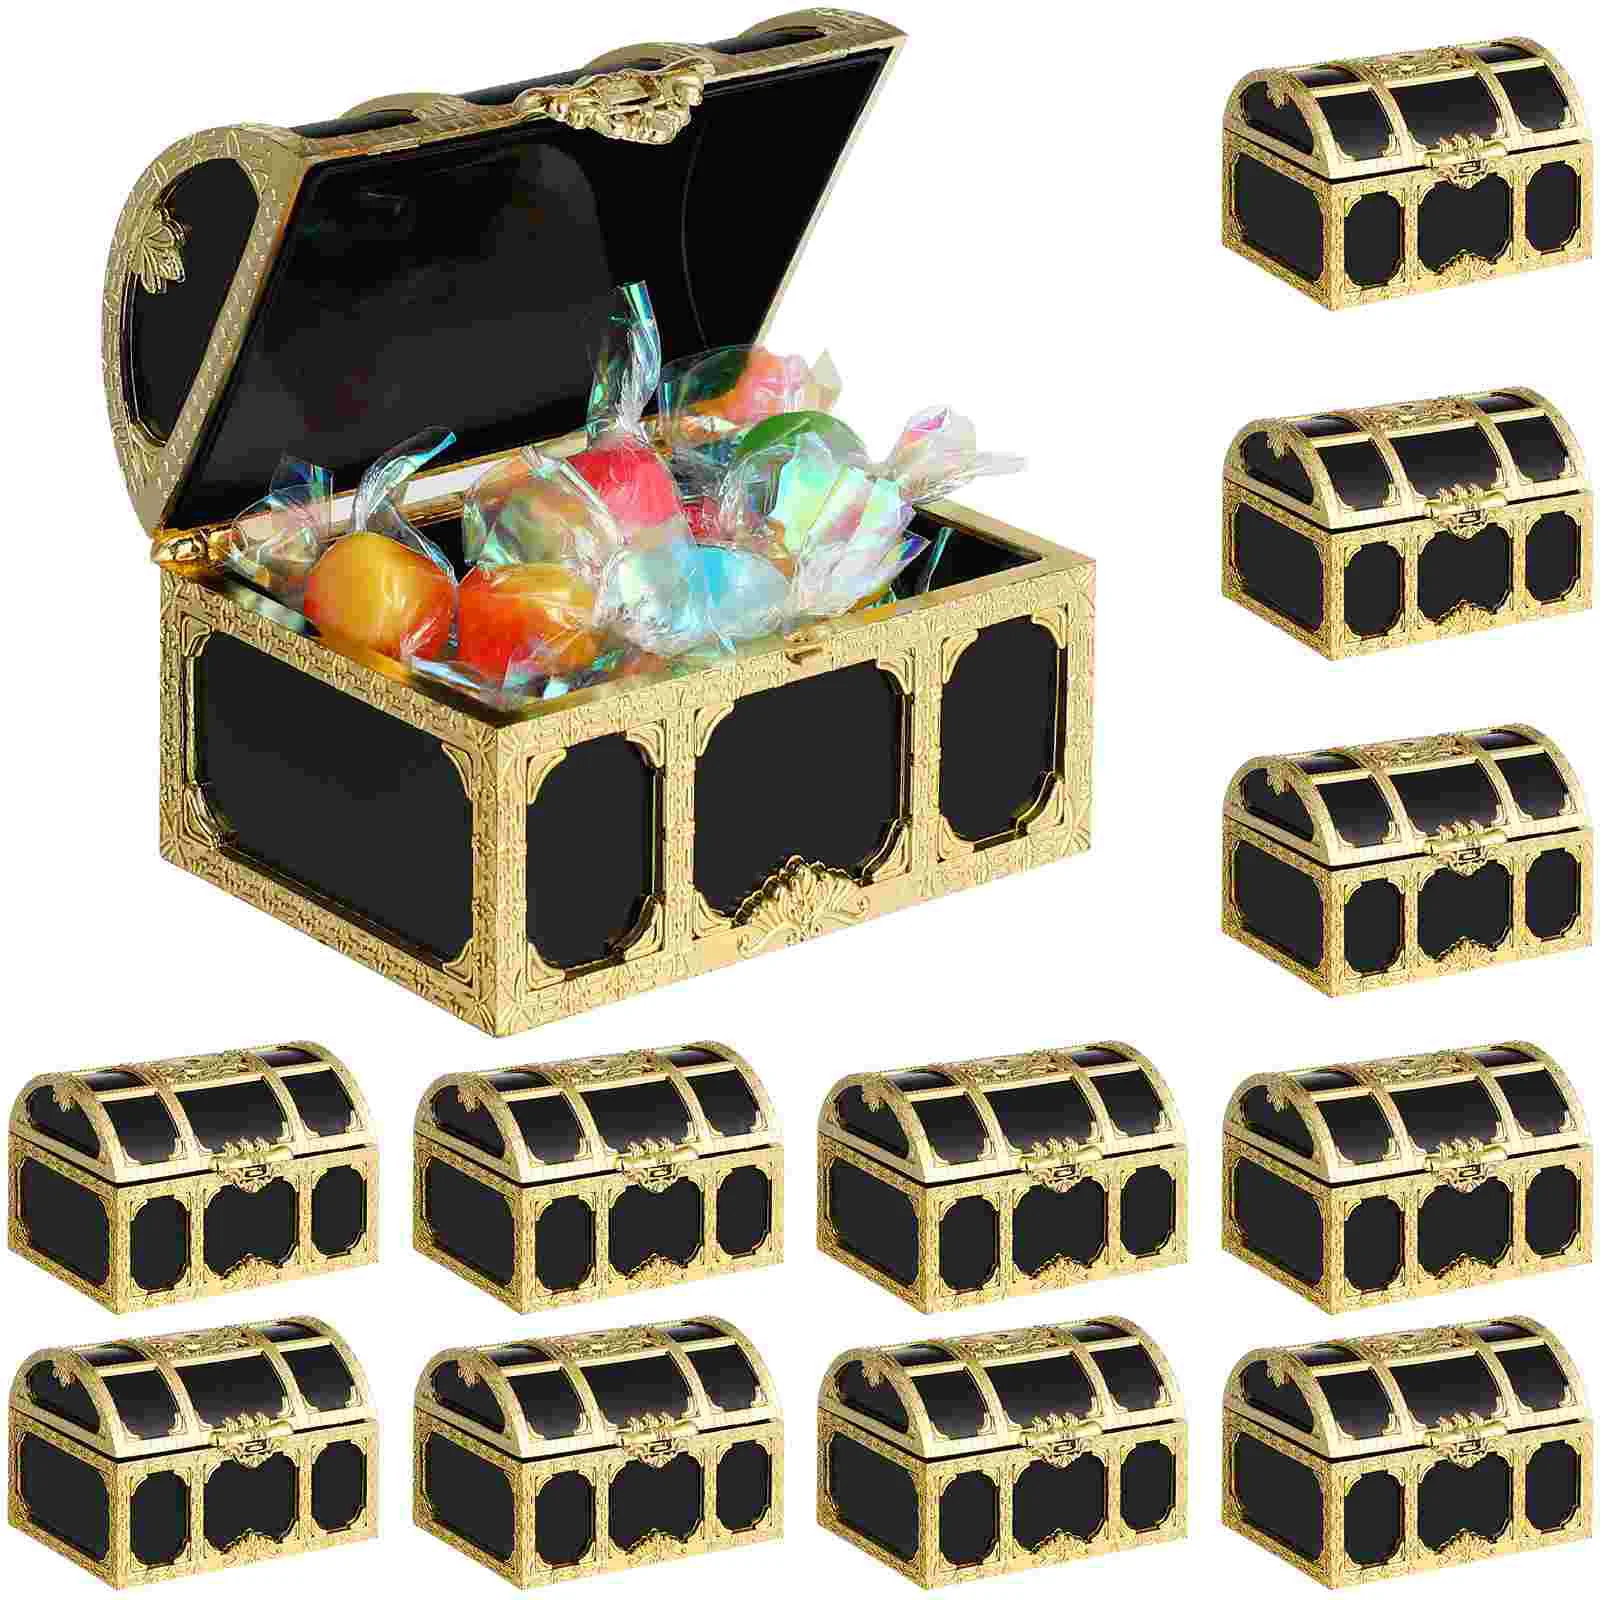 

12 Pcs Kids Playsets Treasure Goodie Box Treat Storage Favor Boxes Pirate Toy Mini Wedding Sugar